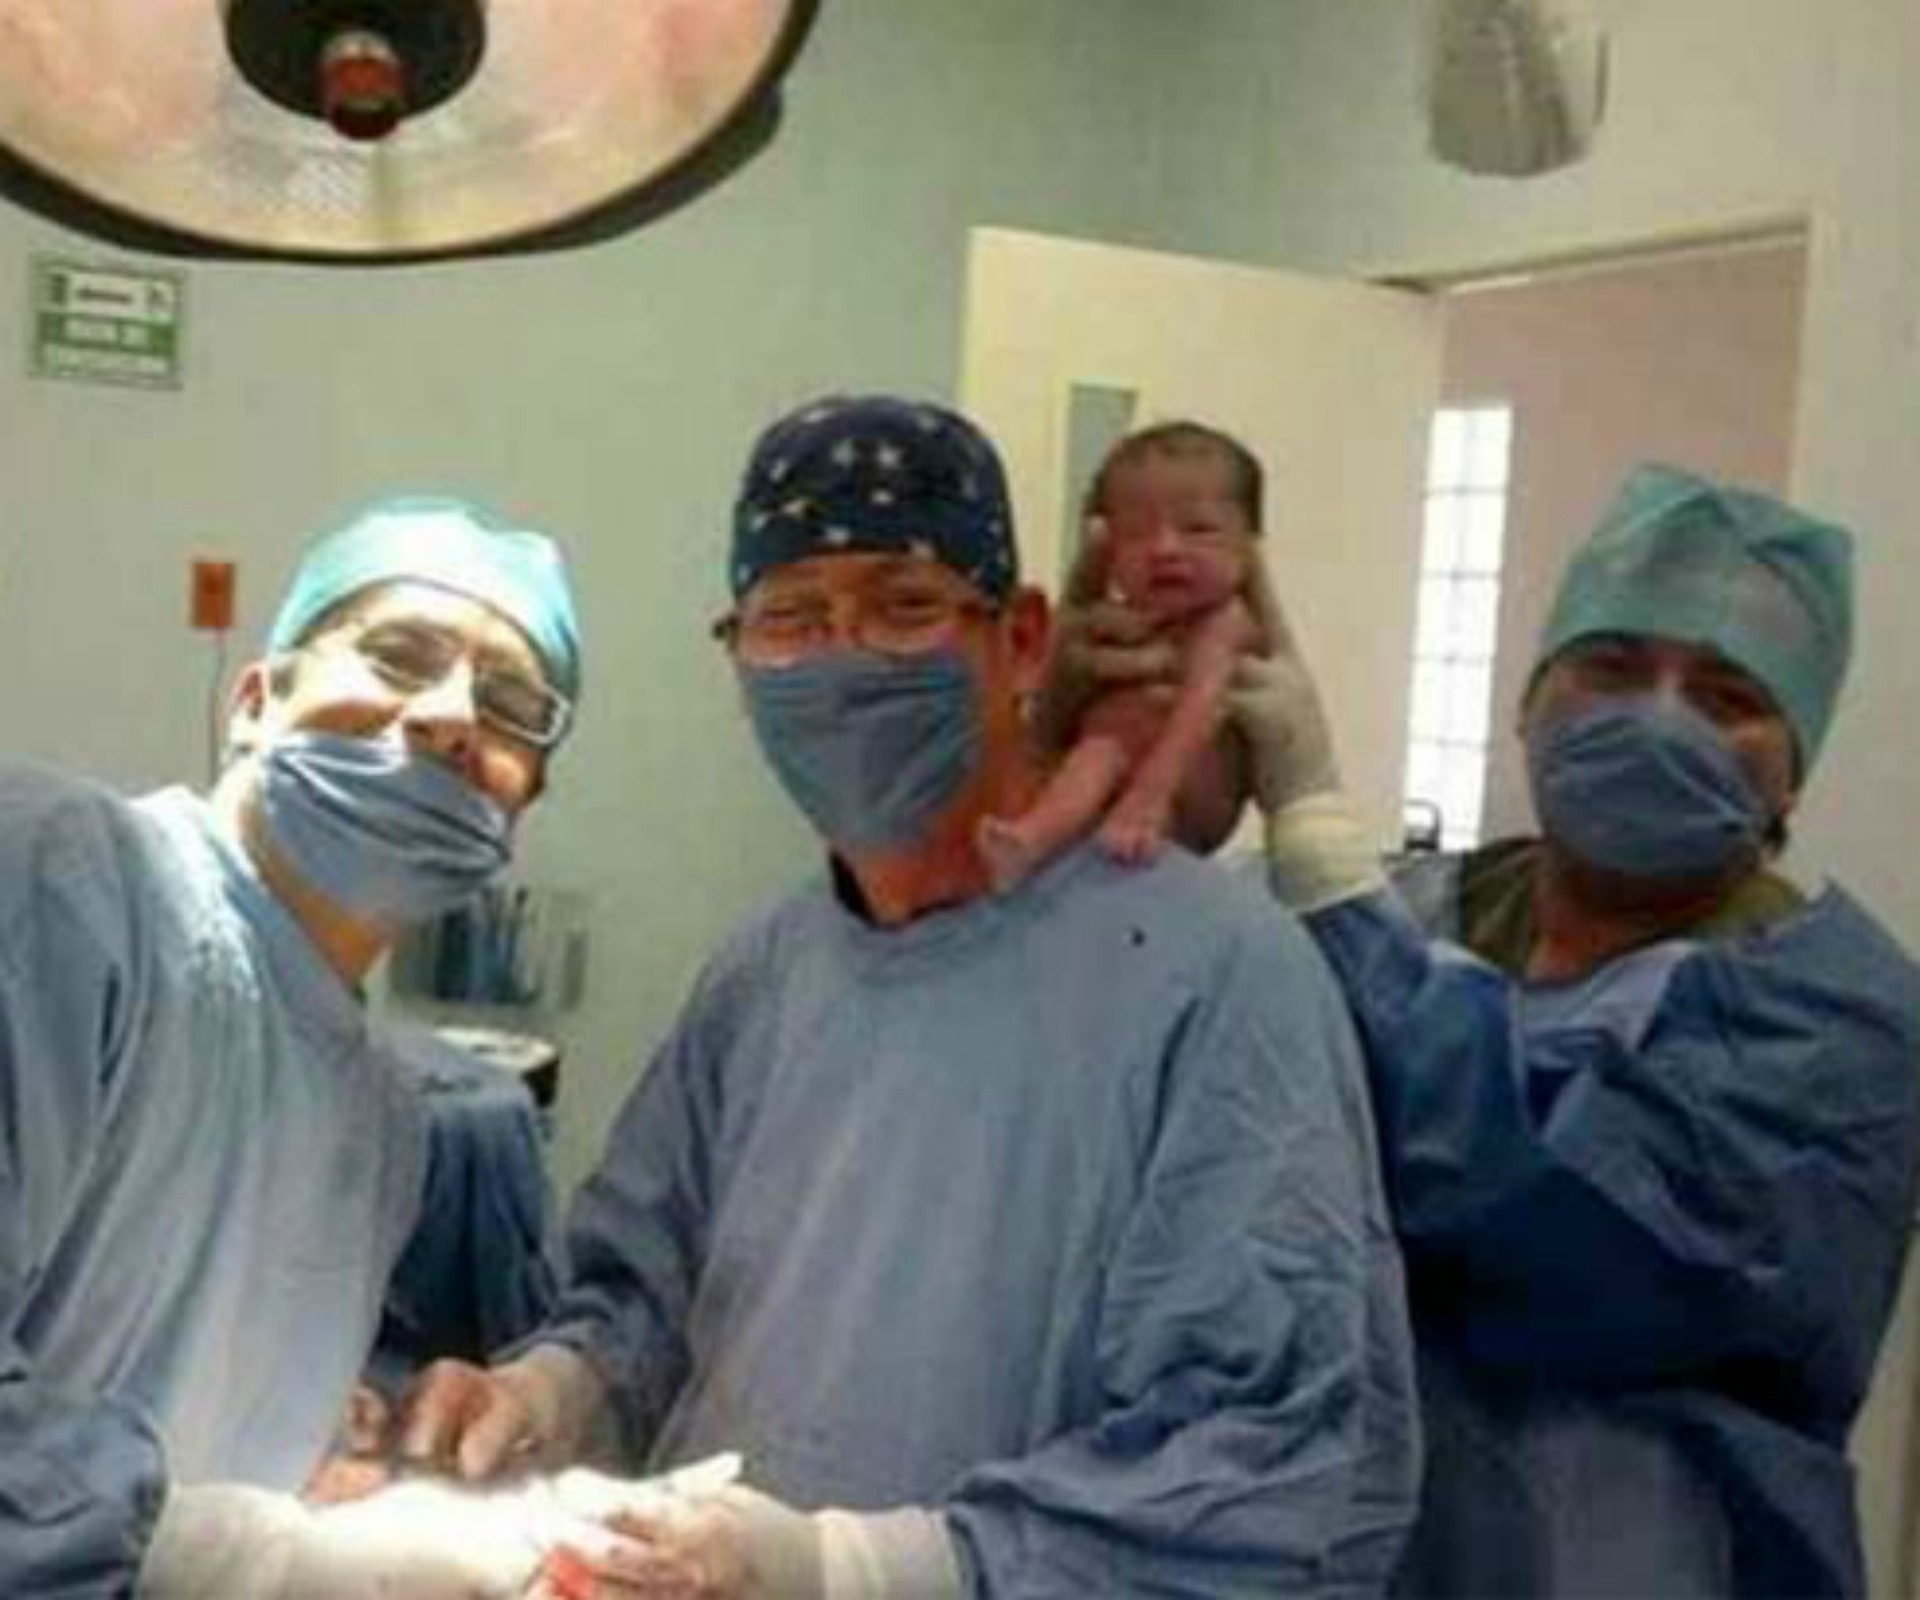 Doctors shamed for bizarre selfie with a newborn